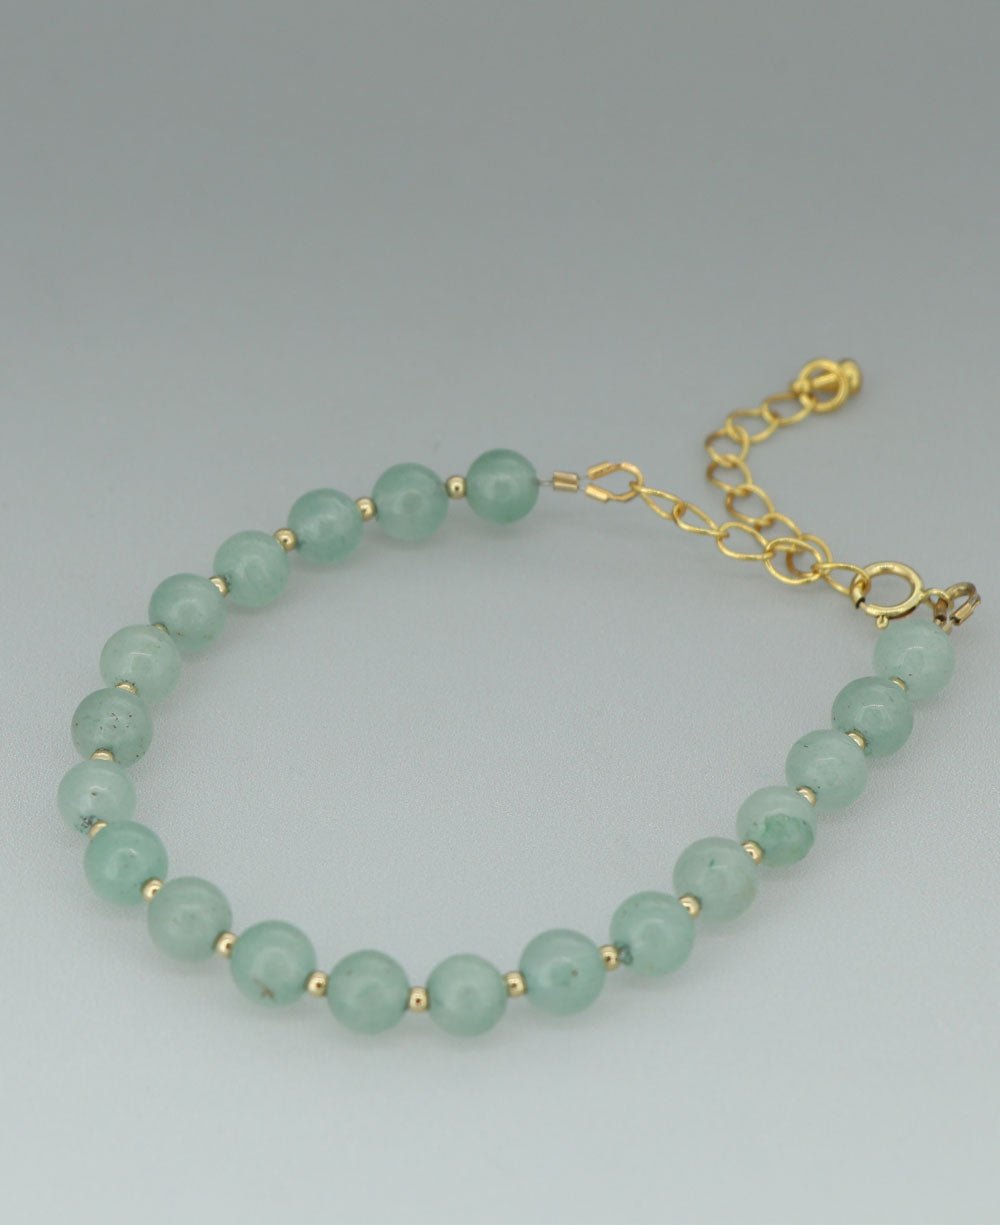 Gemstone Wrist Mala Bracelet, 20 Beads - Bracelets Green Aventurine